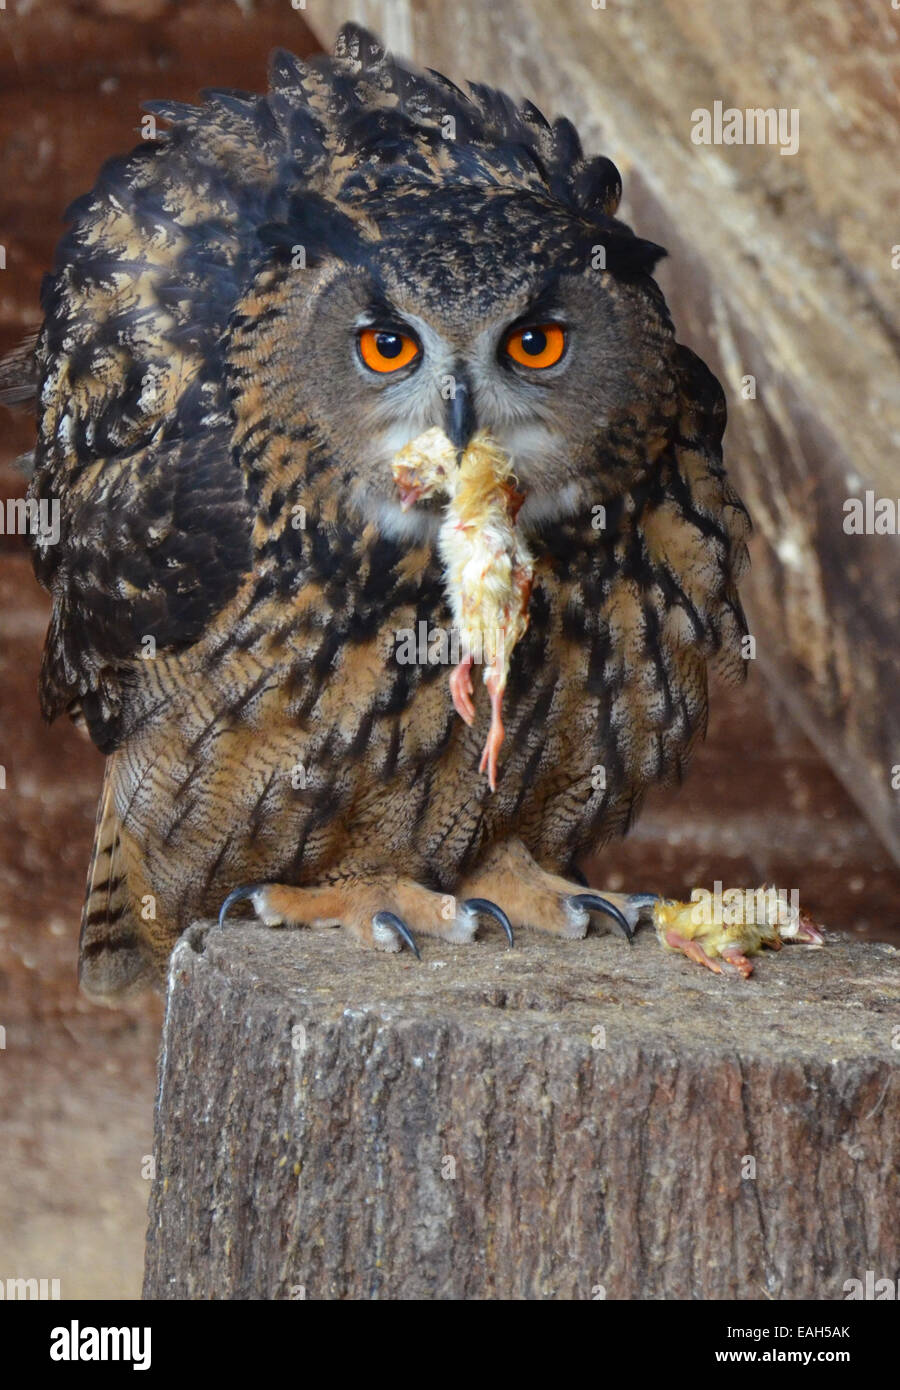 Eurasian eagle-owl eating a chick Stock Photo